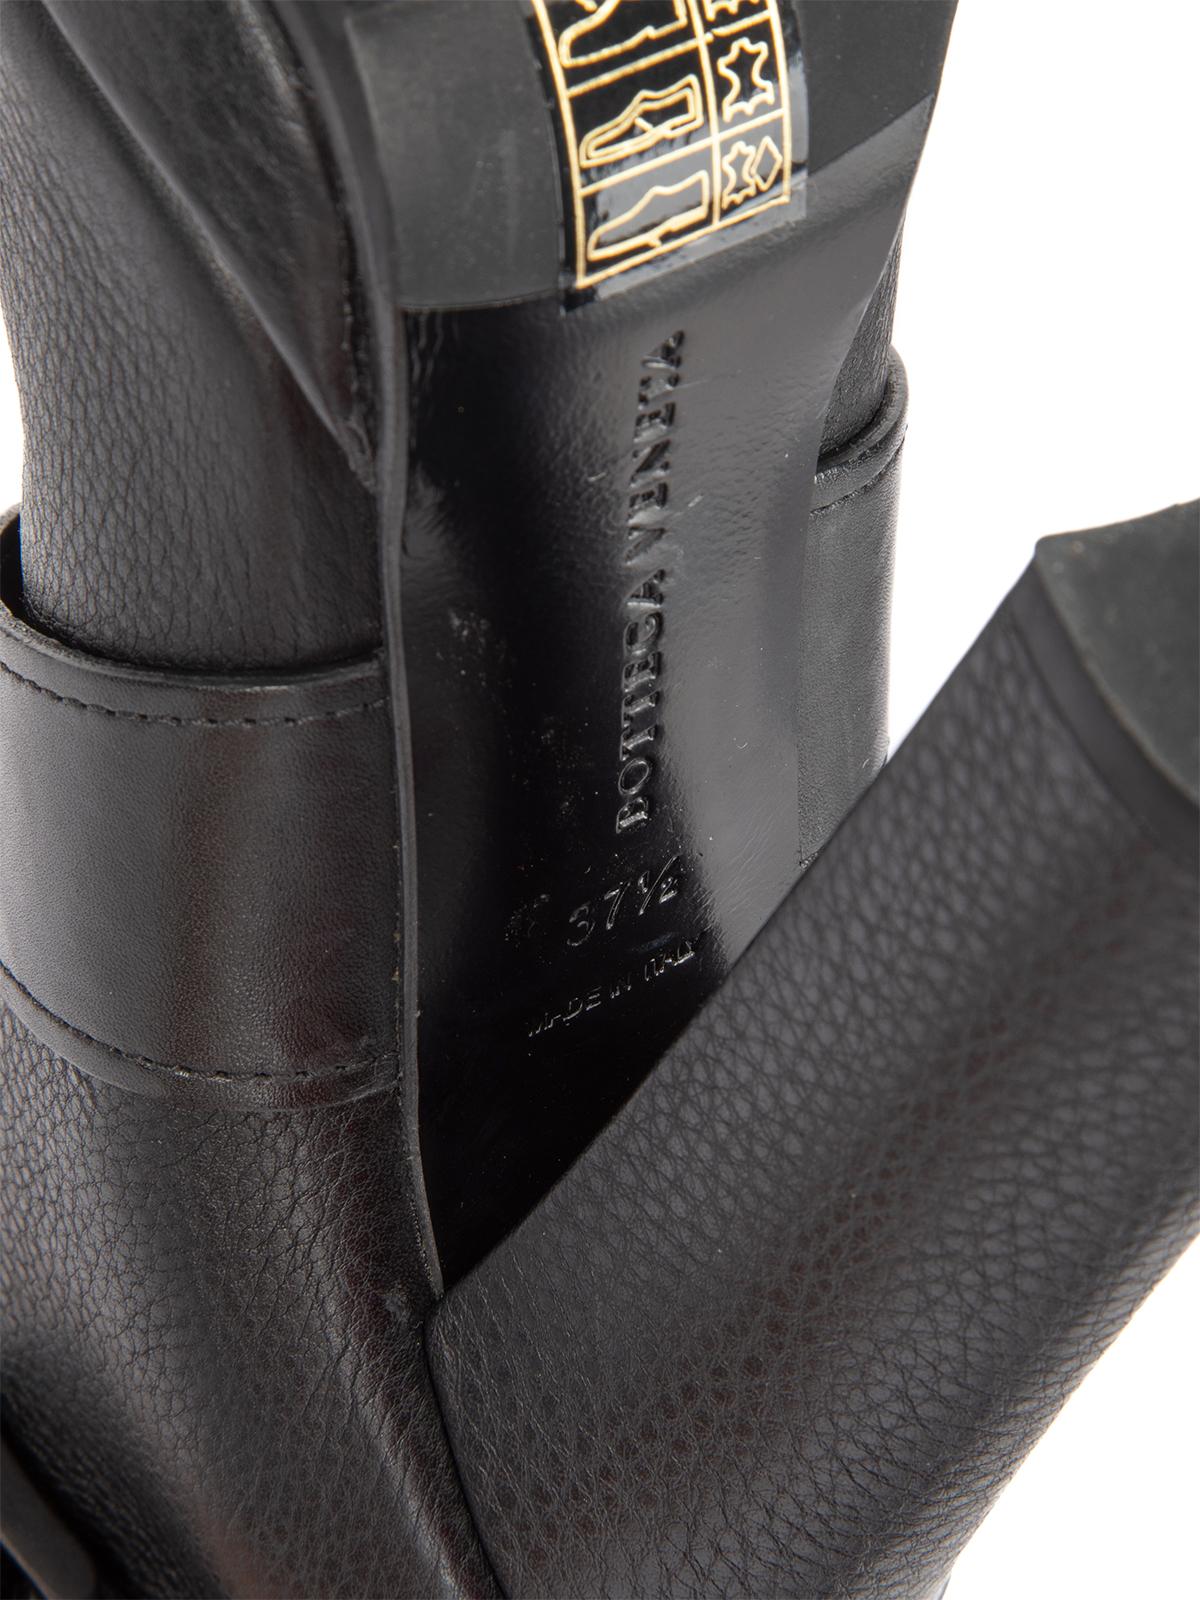 Pre-Loved Bottega Veneta Women's Knee High Boots with Buckle Detail For Sale 4